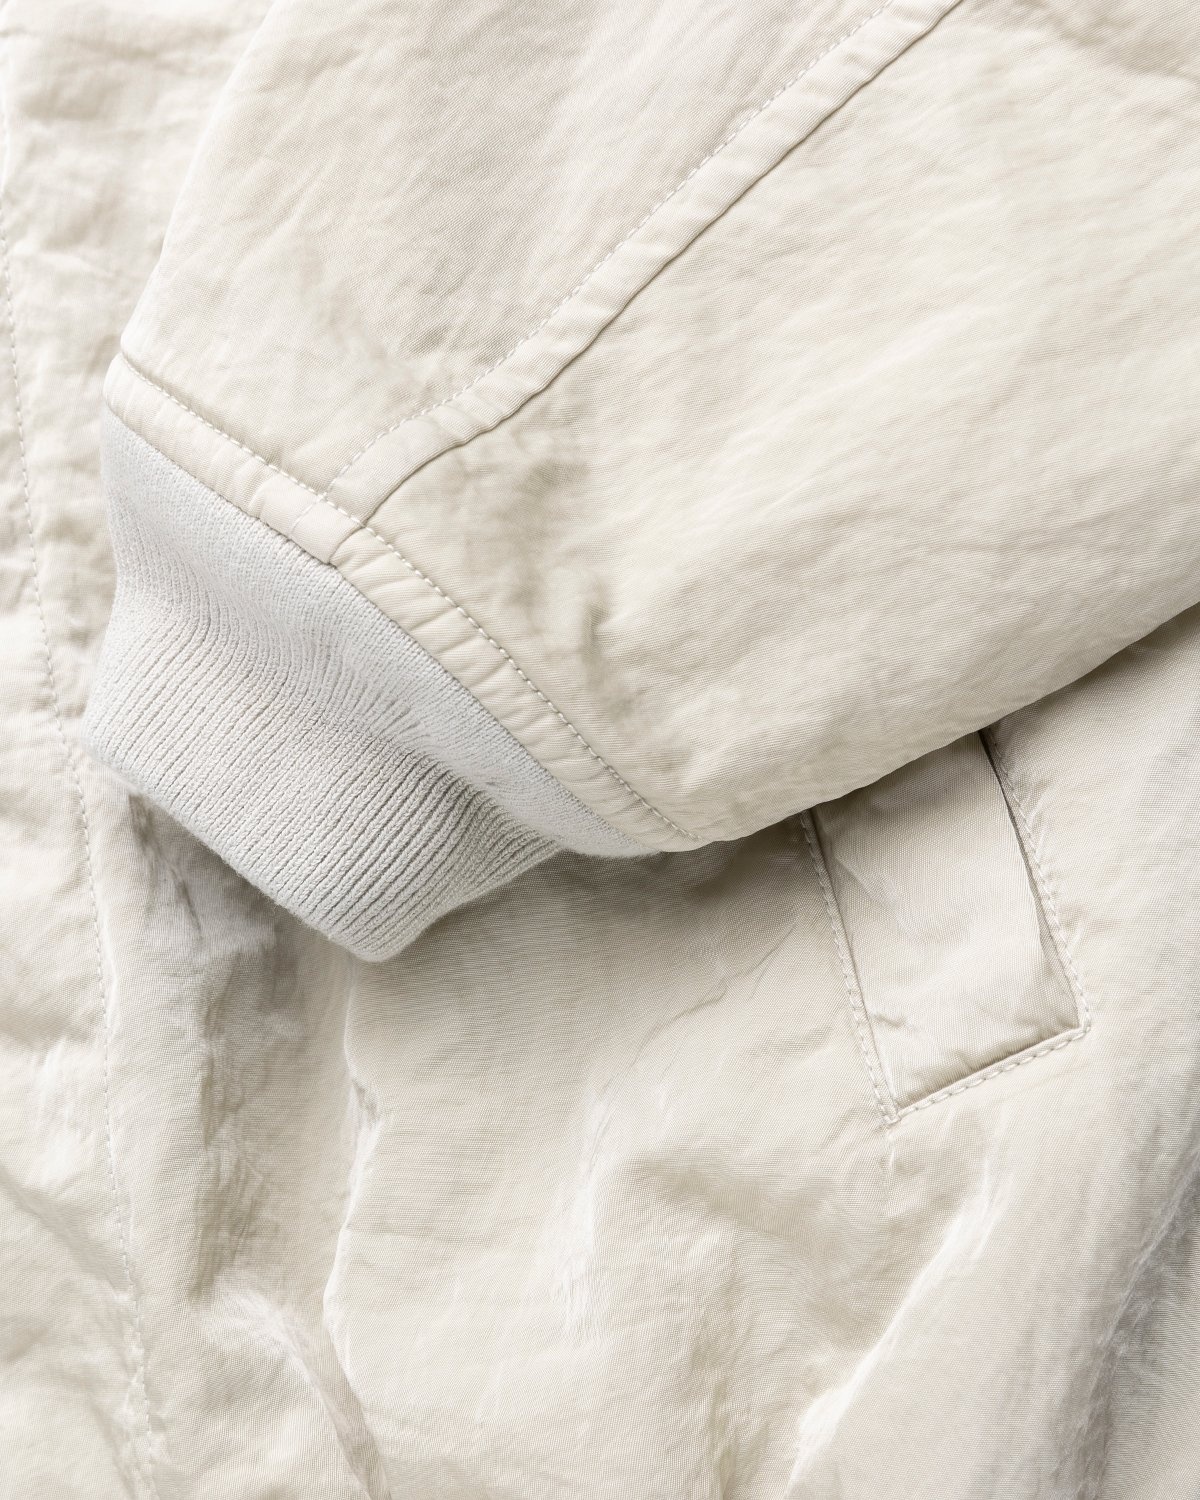 Jil Sander – Blouson Light Pastel Grey - Outerwear - Grey - Image 3